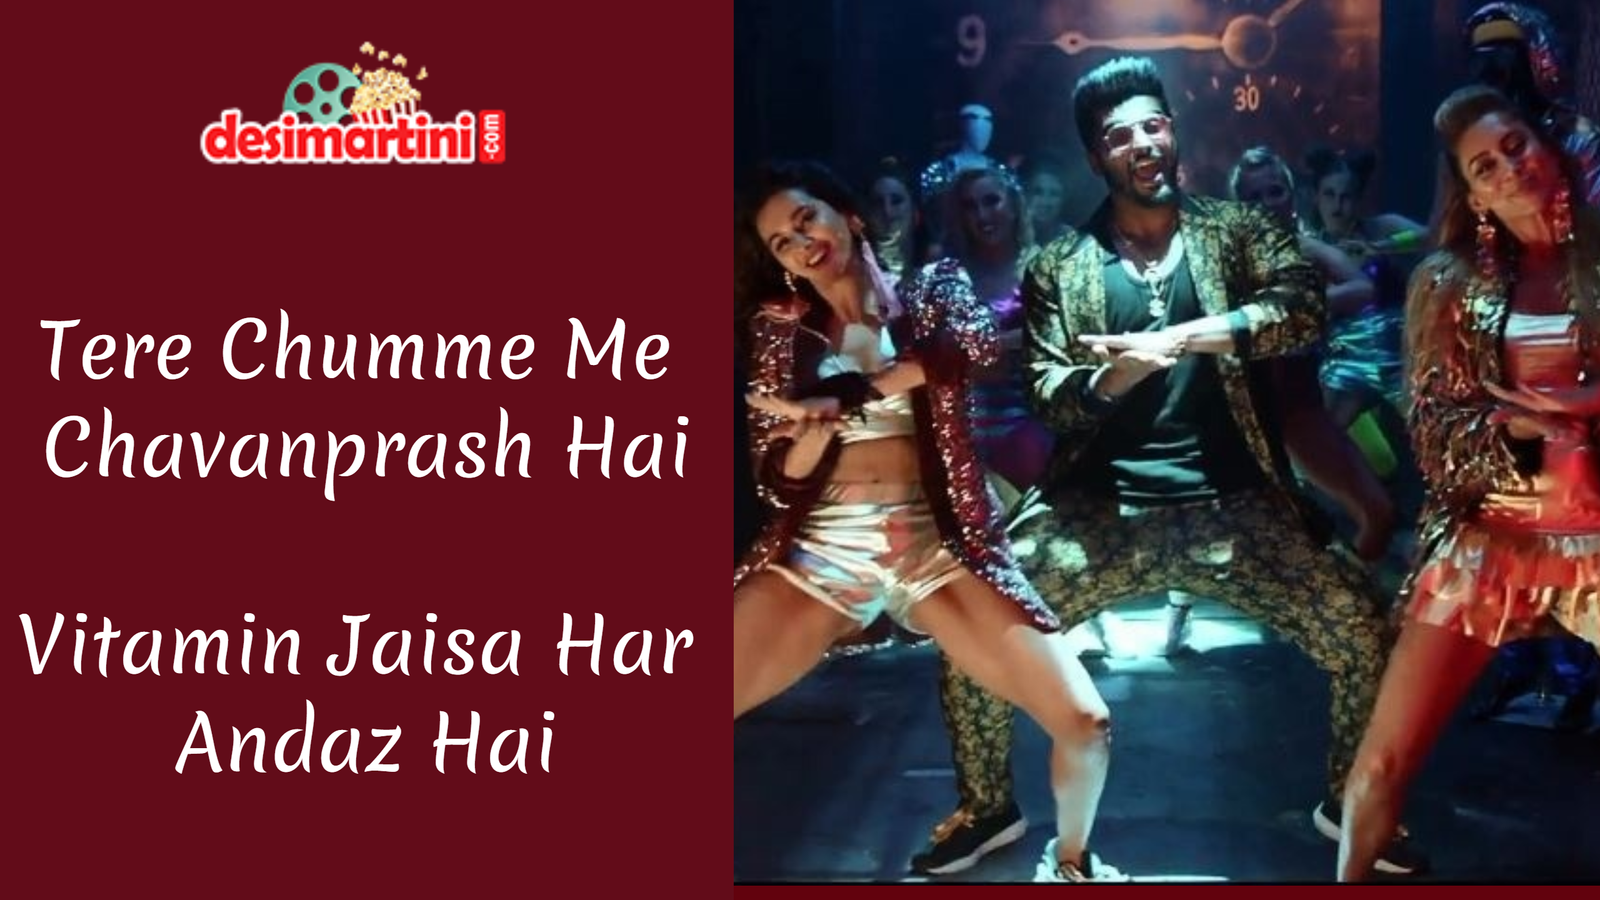 WATCH: Bhavesh Joshi Superhero's Chumme Mein Chavanprash Will Make You Go ROFL With Its Lyrics!